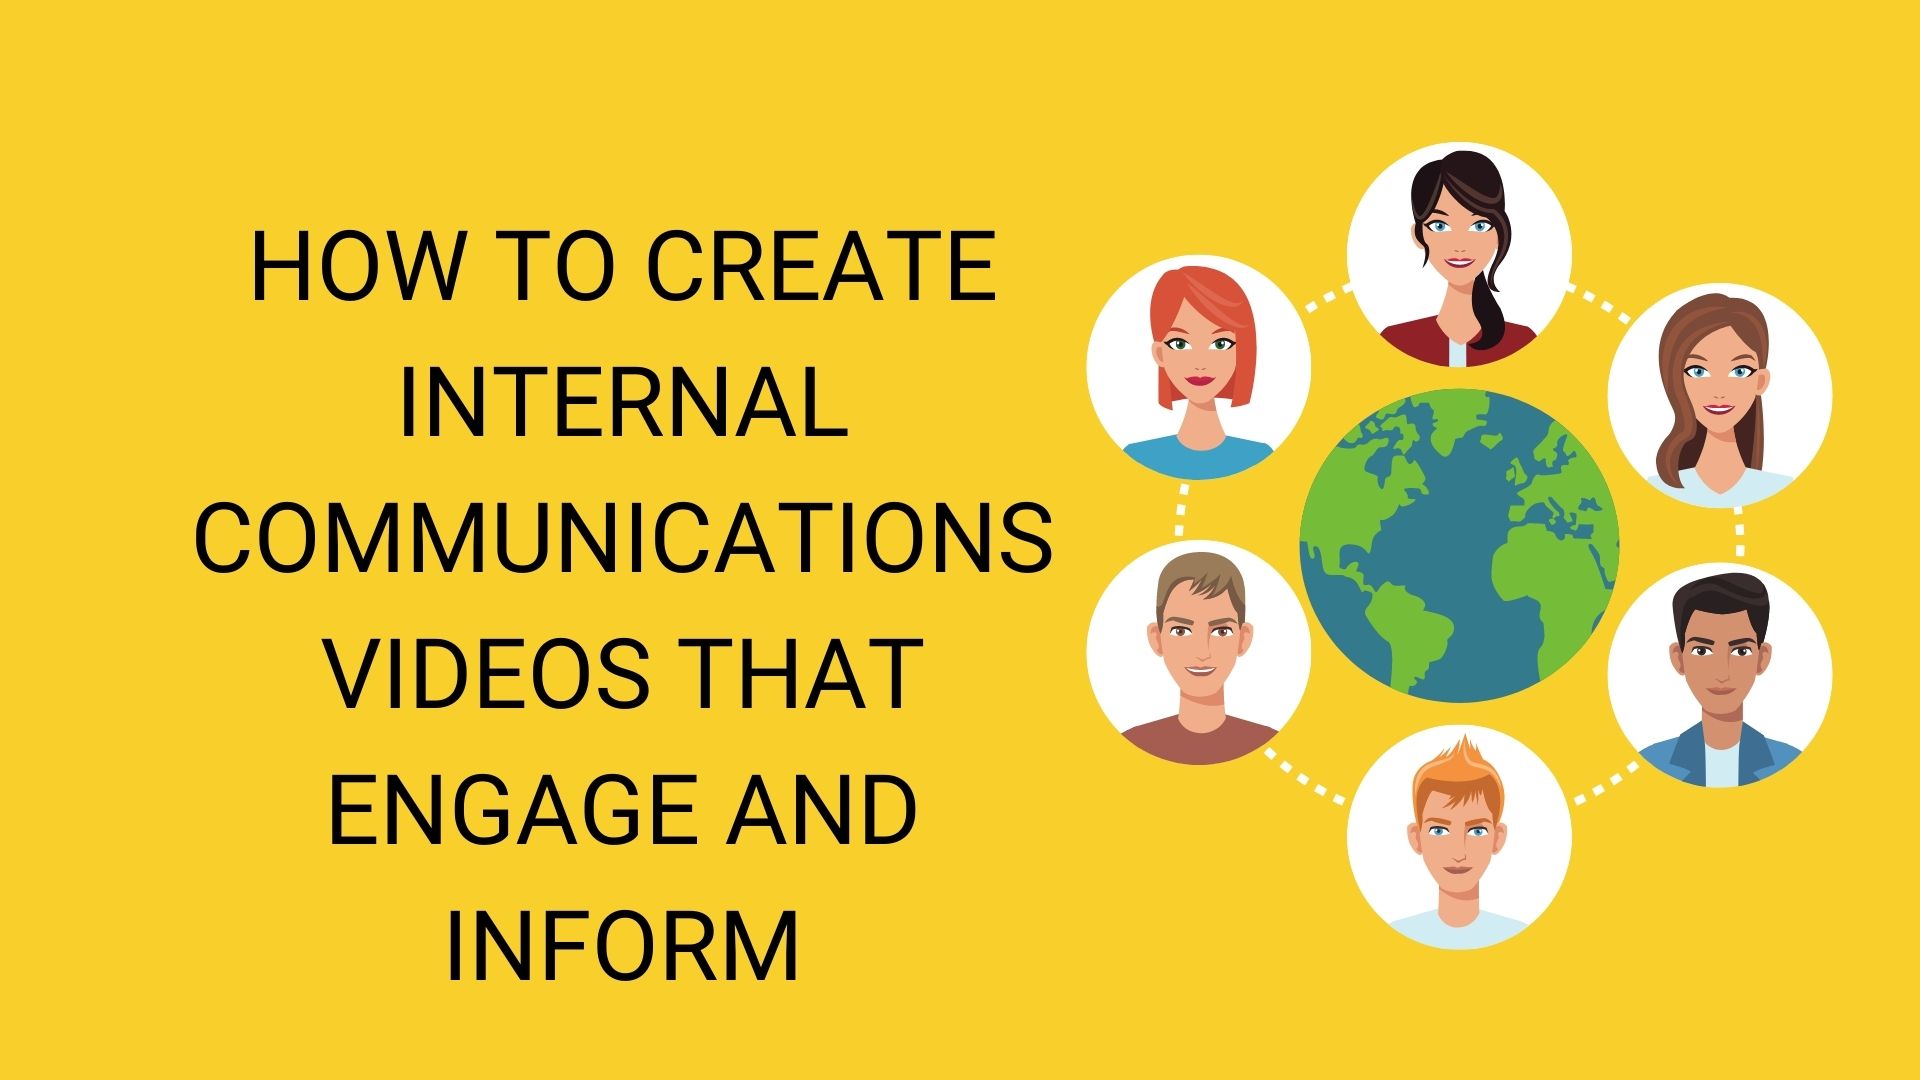 Internal communications videos